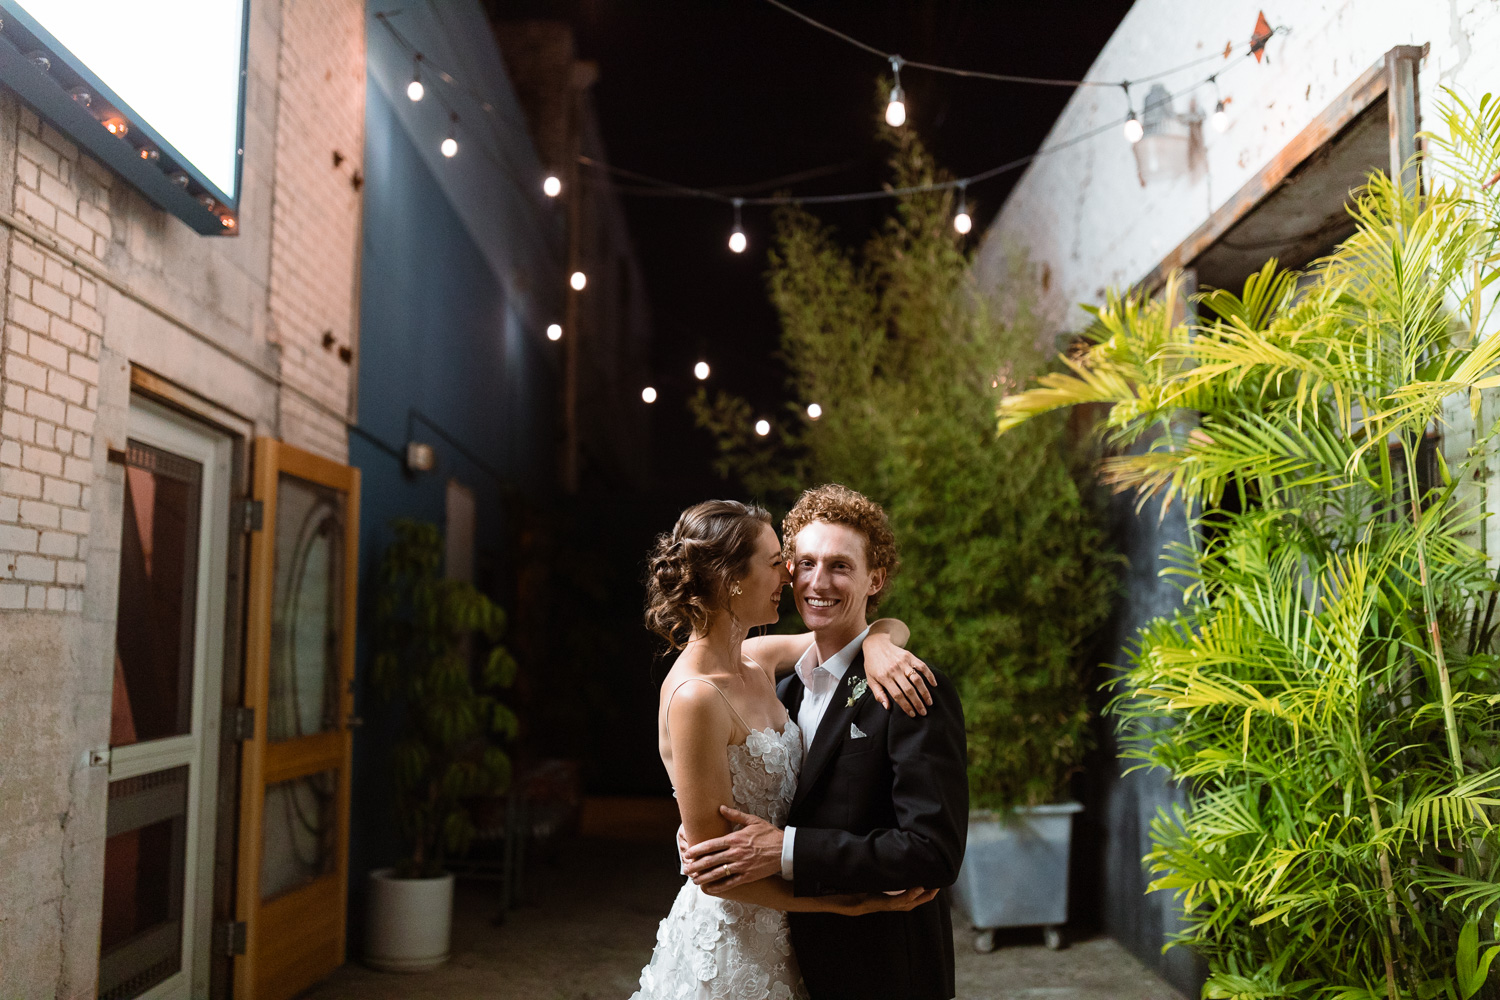 196-Grass-Room-DTLA-Los-Angeles-Real-Wedding-Photos-Ryanne-Hollies-Photography-275.JPG